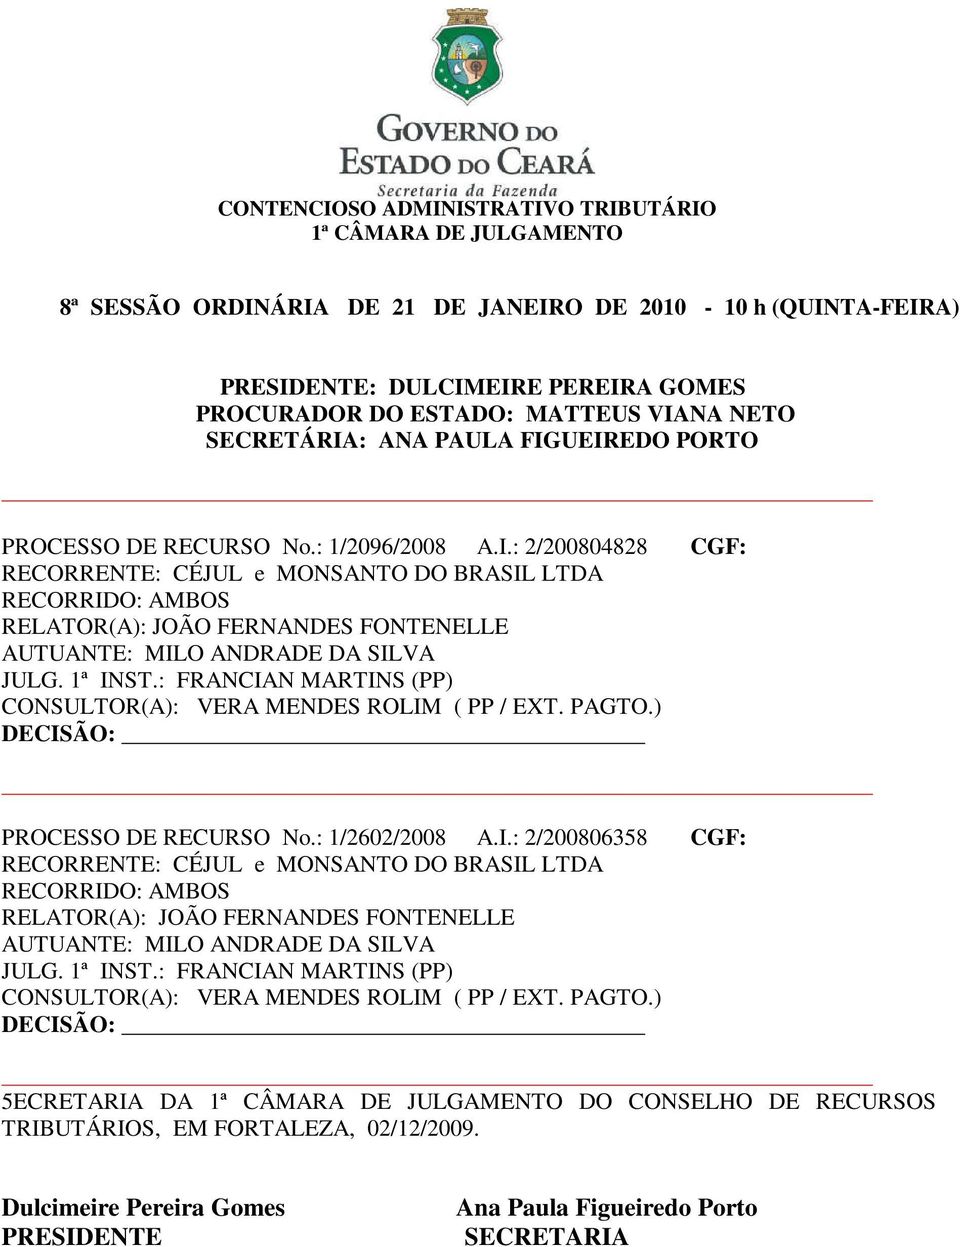 1ª INST.: FRANCIAN MARTINS (PP) CONSULTOR(A): VERA MENDES ROLIM ( PP / EXT. PAGTO.) TRIBUTÁRIOS, EM FORTALEZA, 02/12/2009.